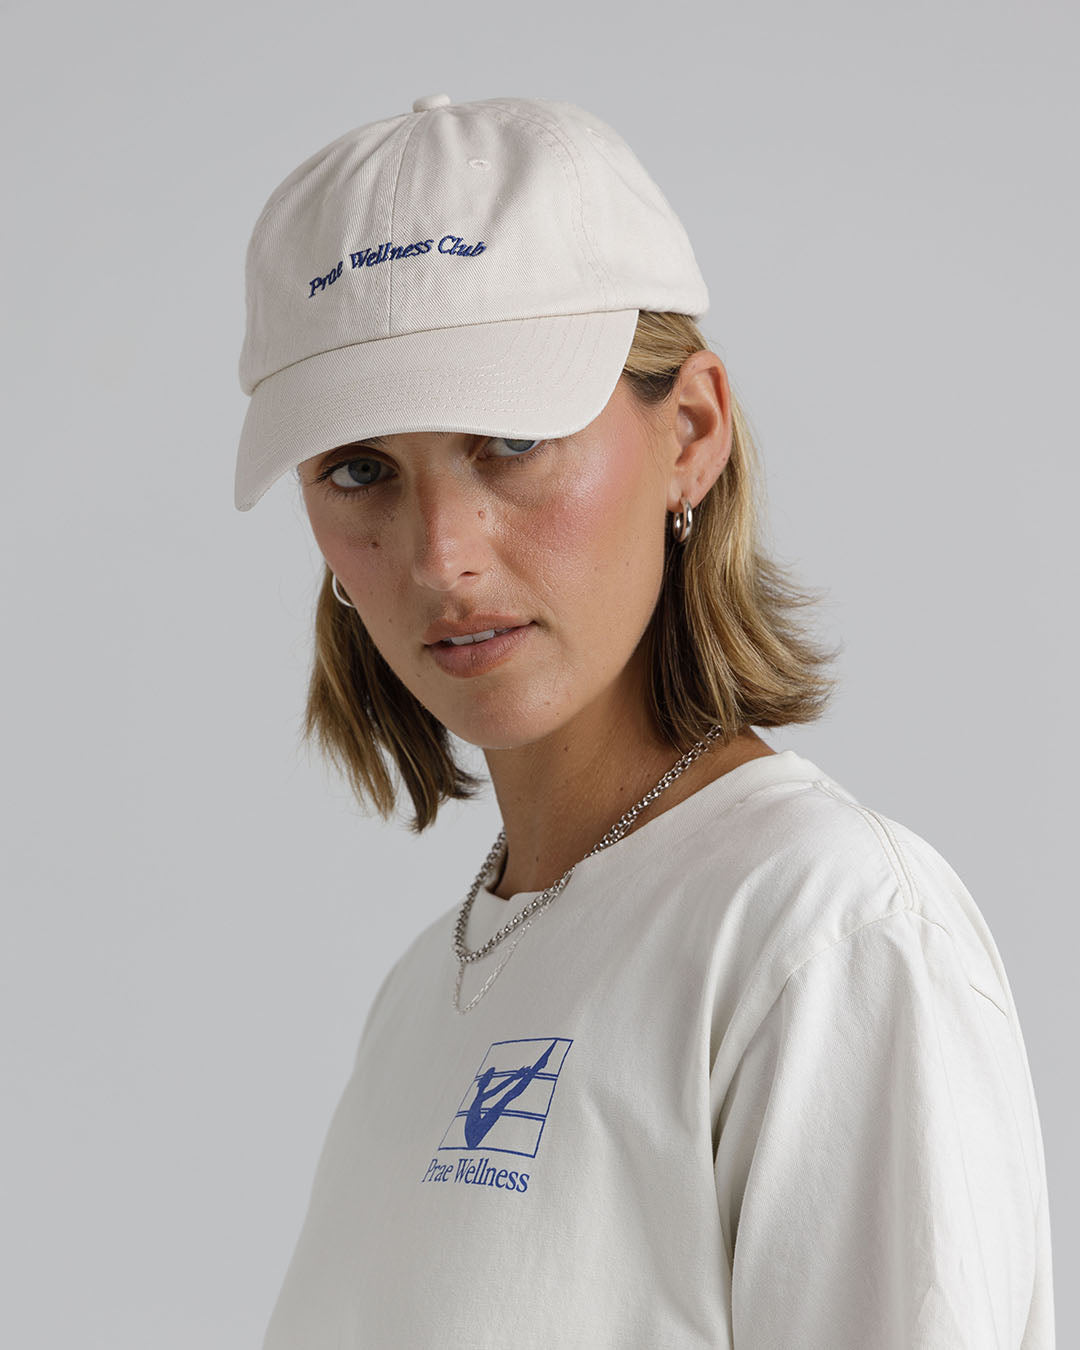 Prae Wellness Club Cap – Beige / Royal Blue Hats by Prae Wellness - Prae Store